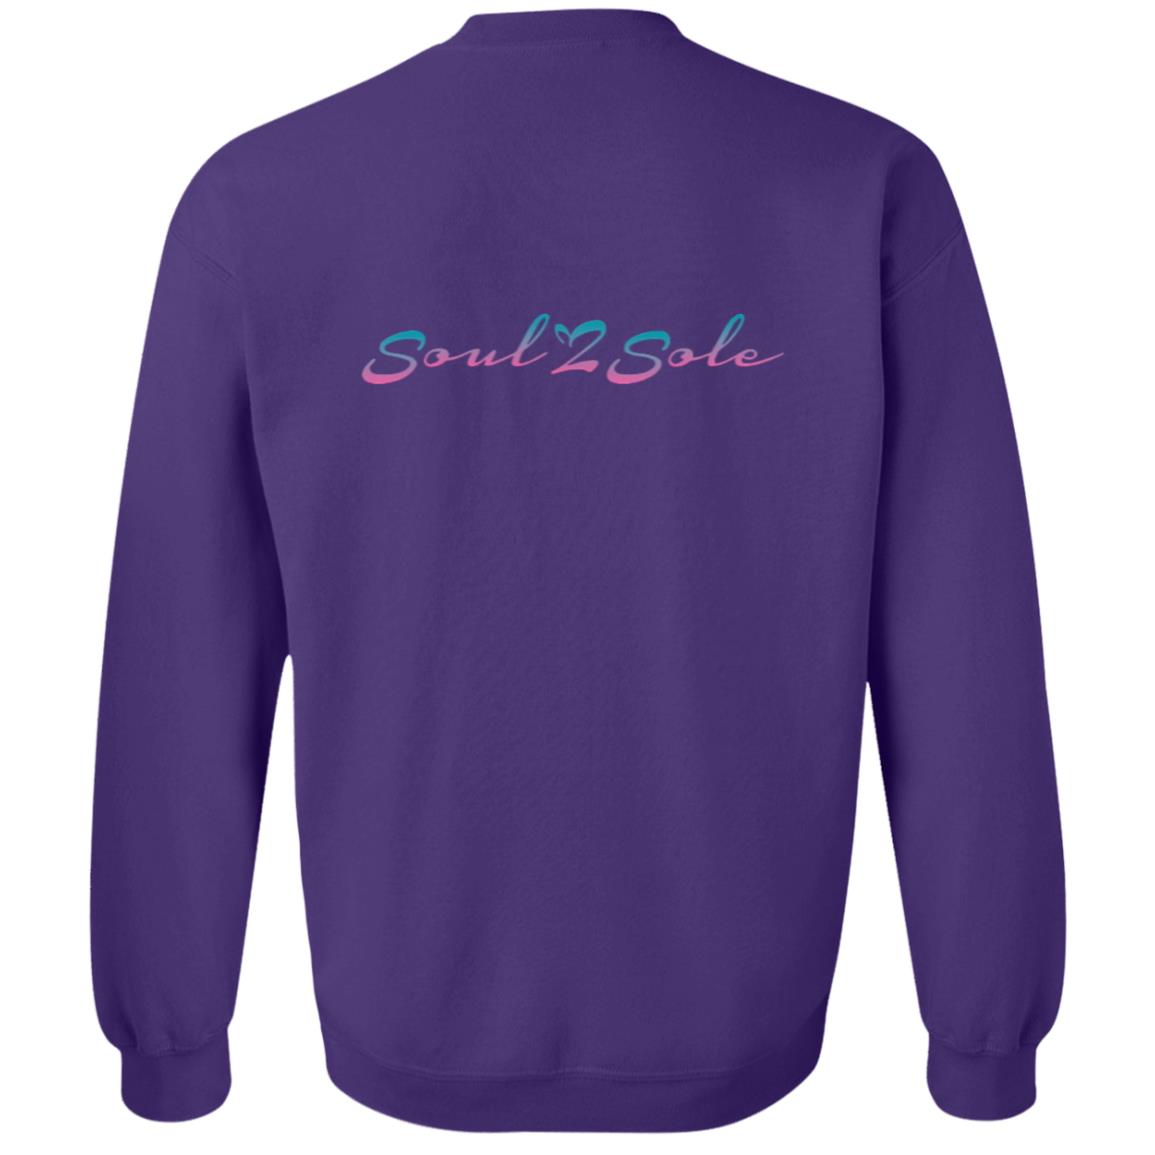 S2S personalized Crewneck Pullover Sweatshirt